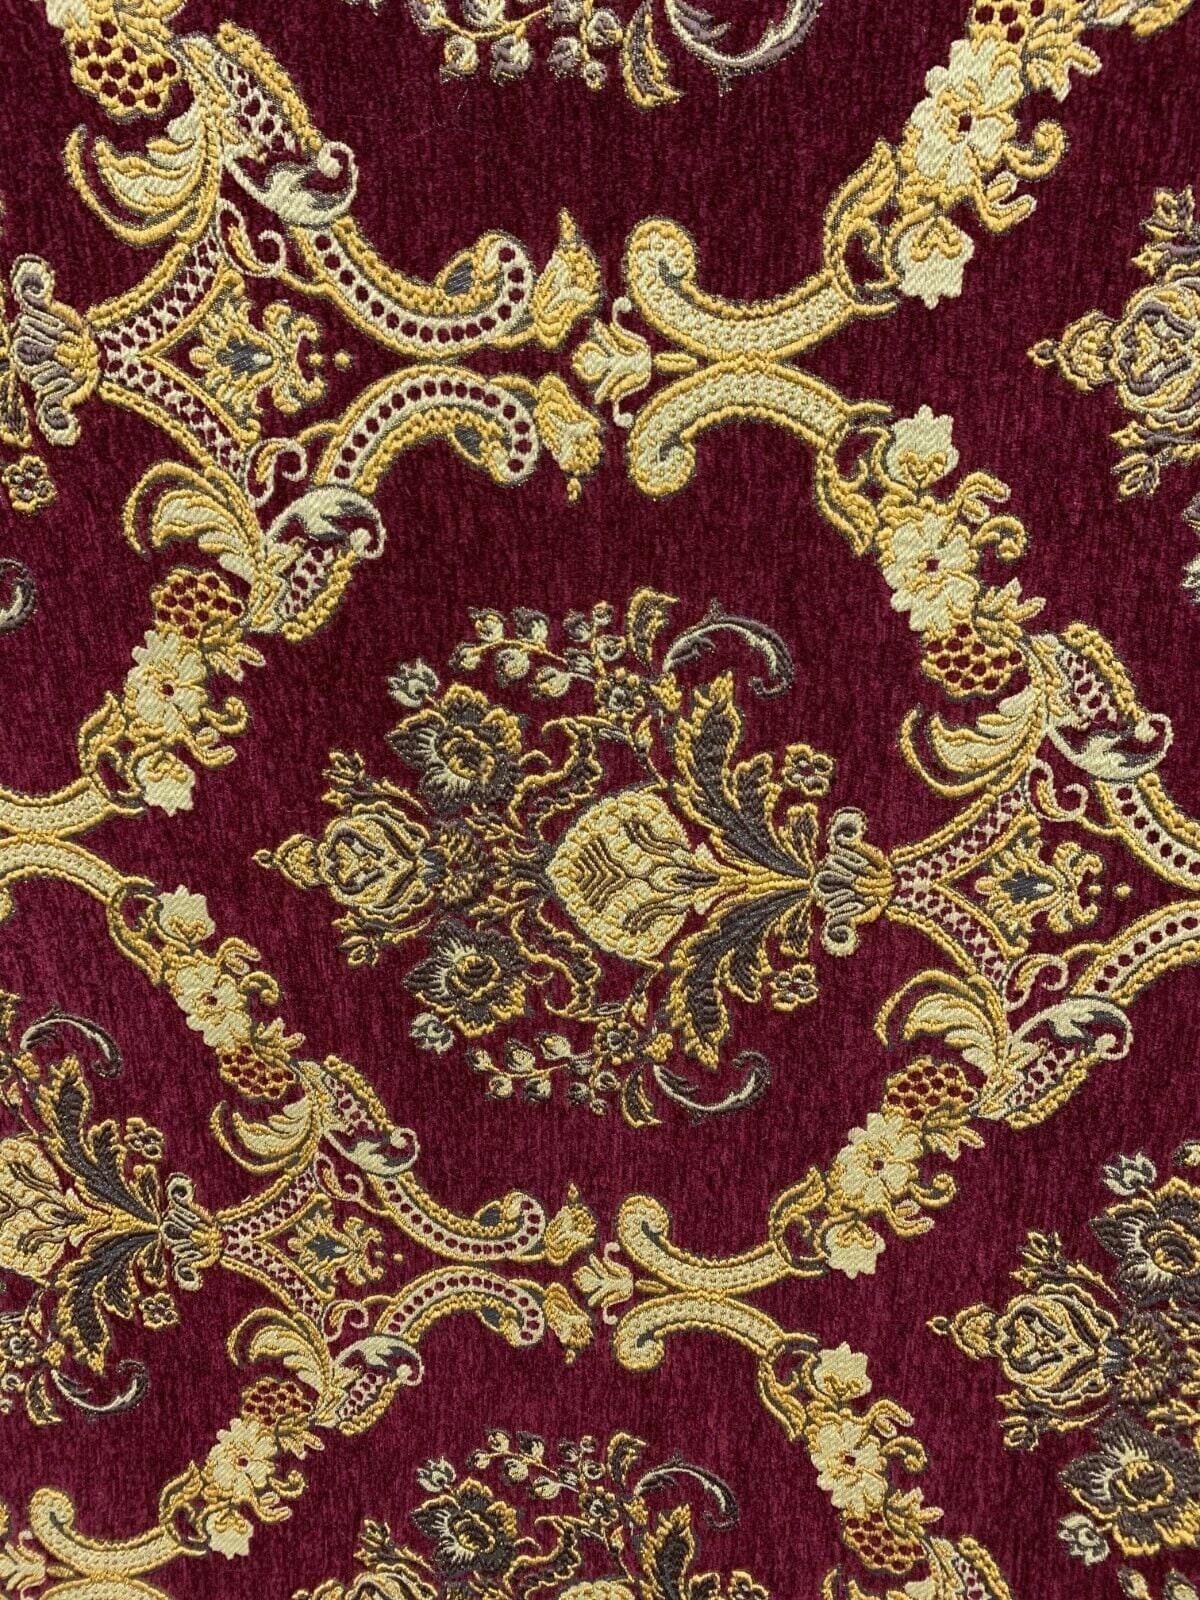 PALERMO Burgundy Gold Floral Damask Brocade Jacquard Fabric